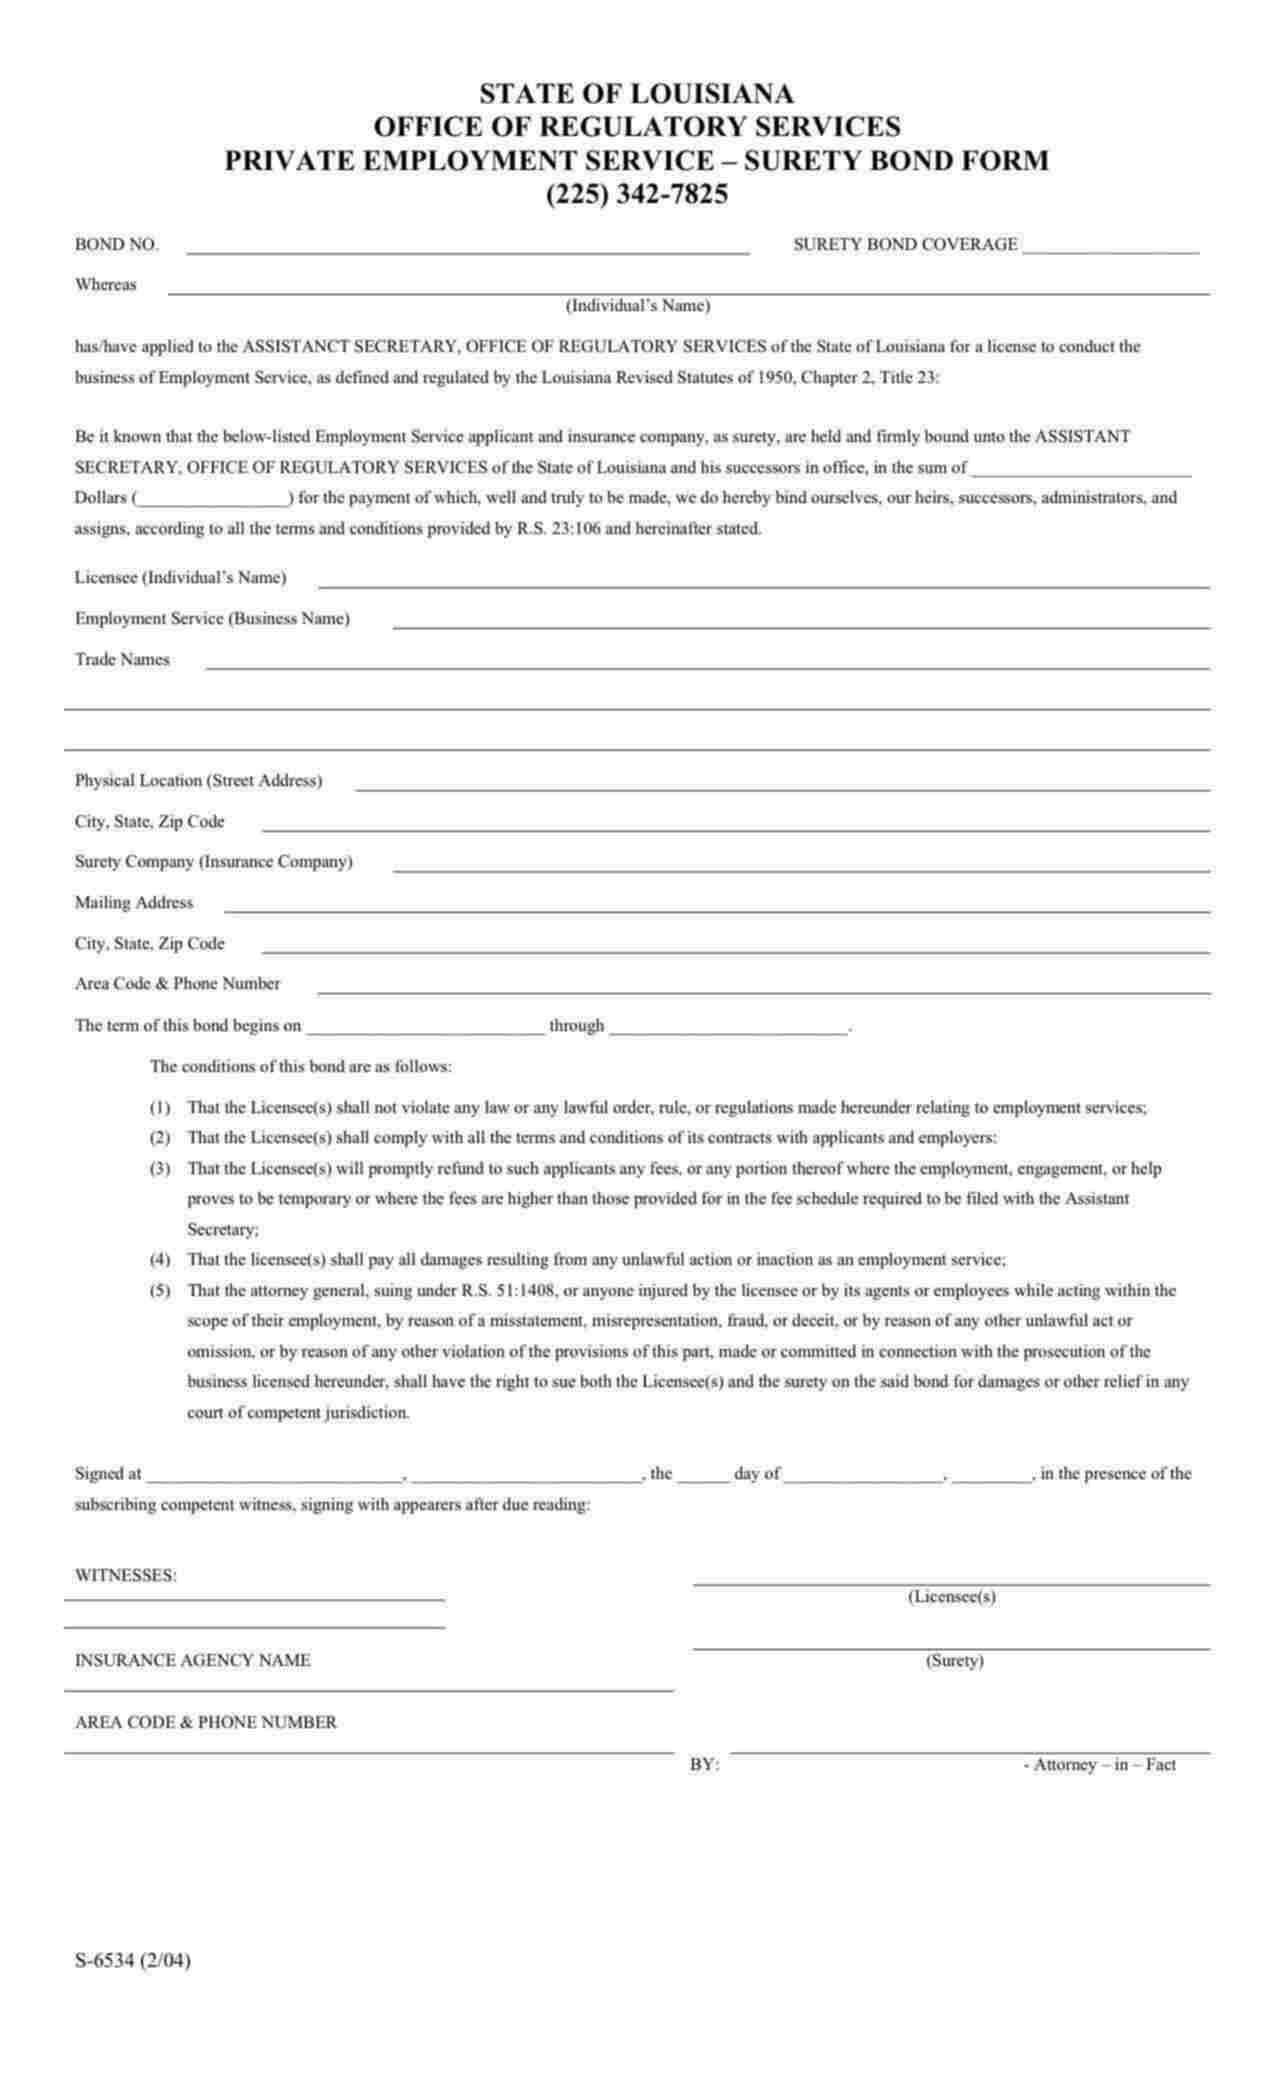 Louisiana Private Employment Service Bond Form